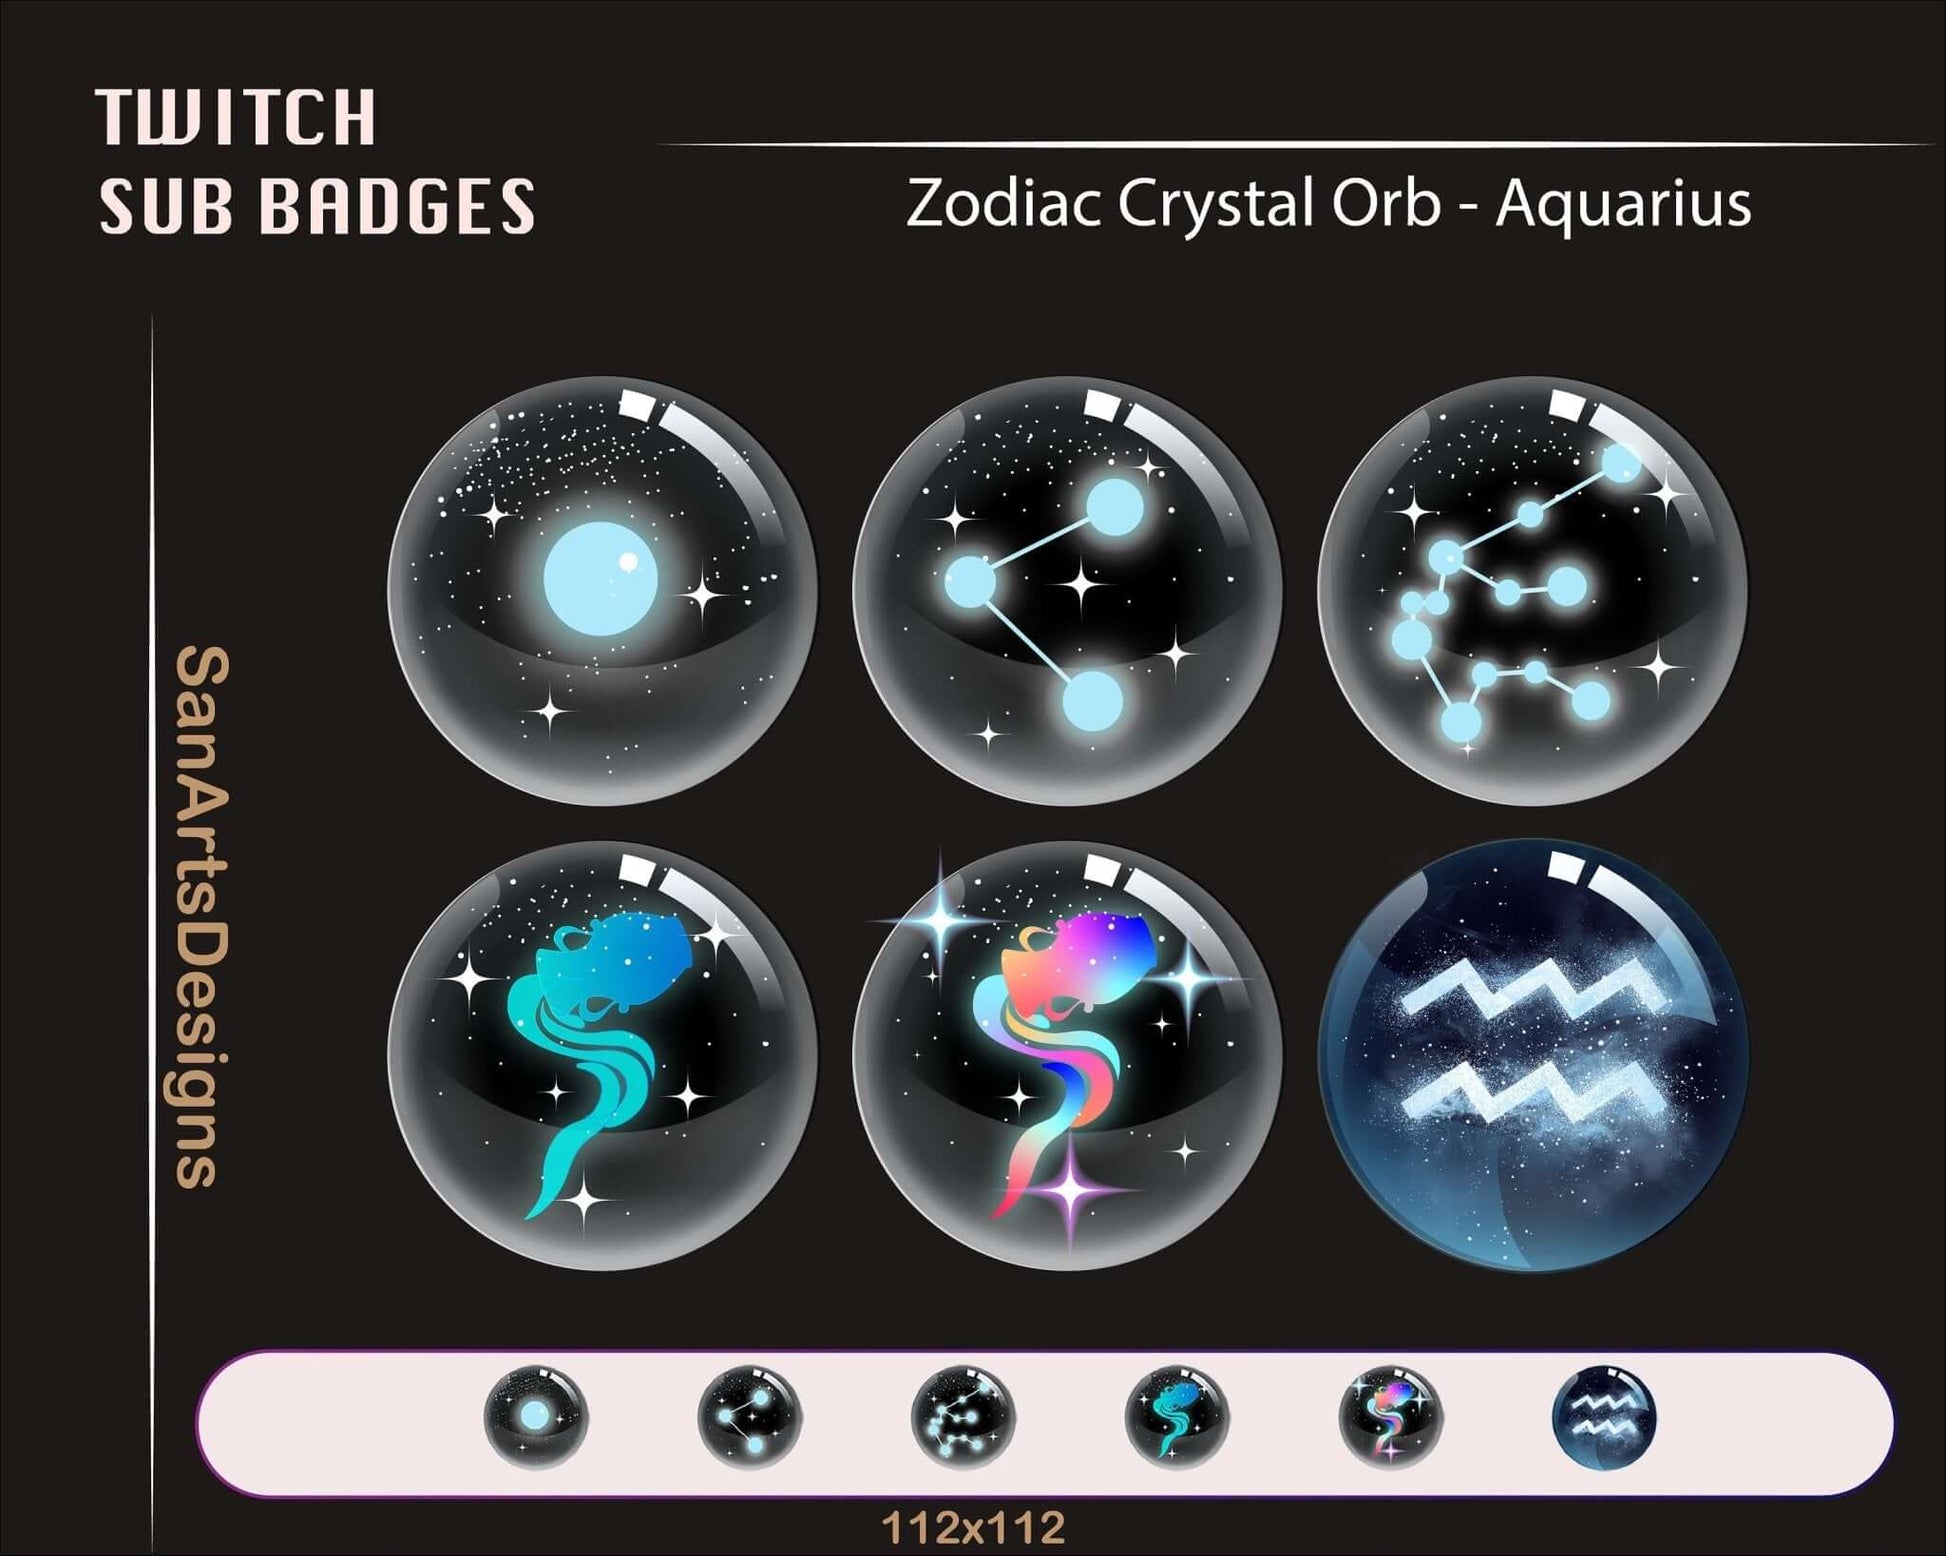 12 Zodiac Magic Crystal Balls Twitch Sub Badges - Badges - Stream K-Arts